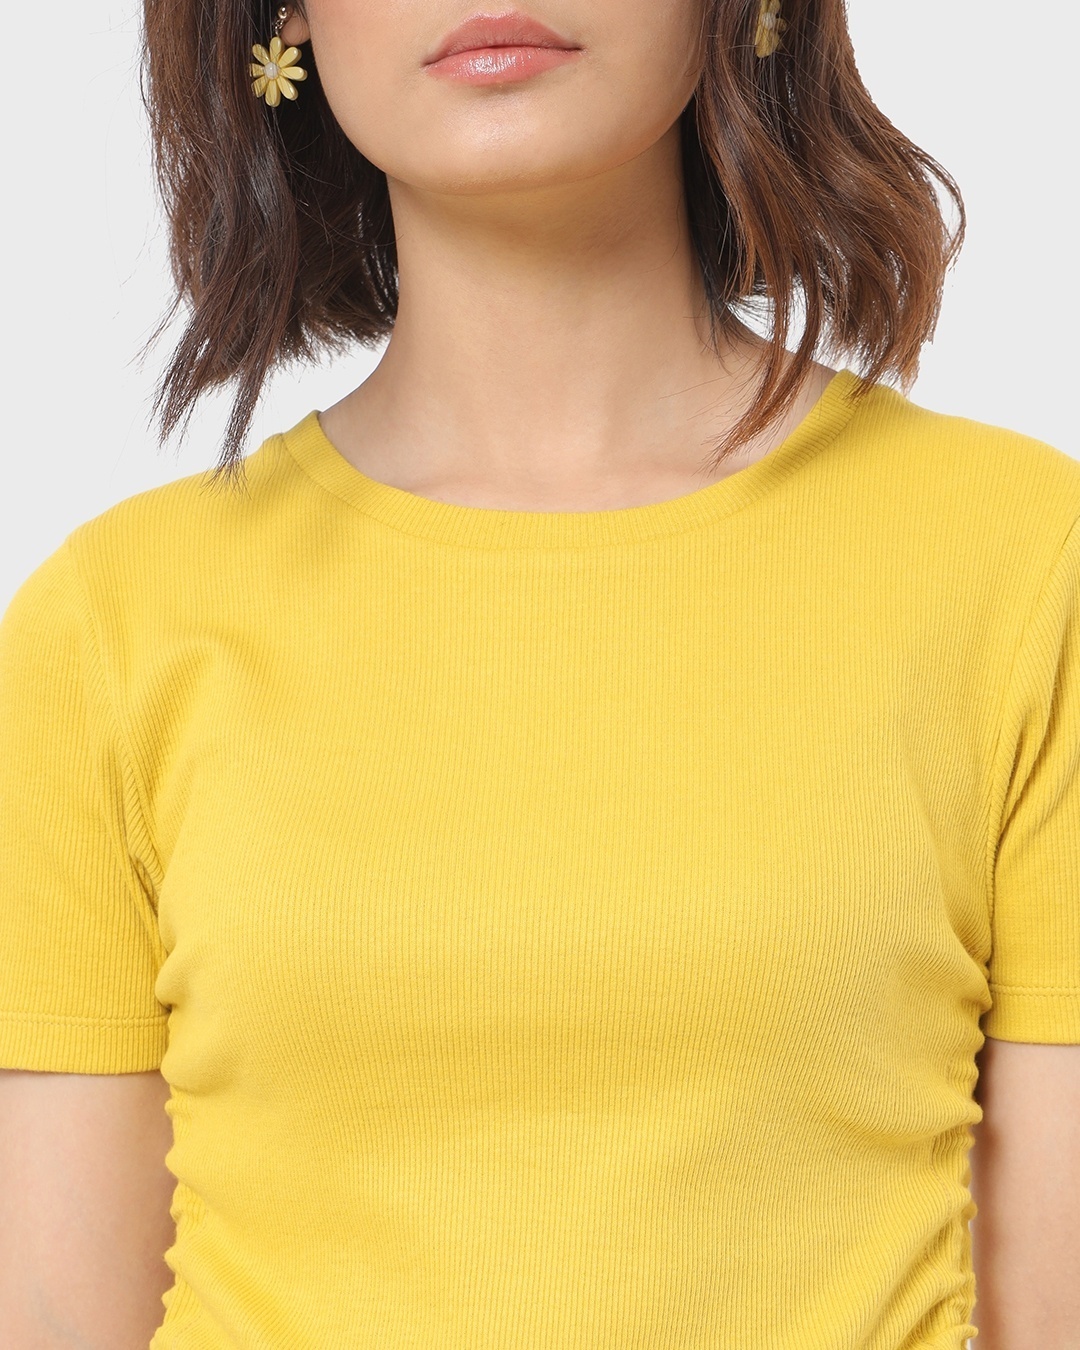 Shop Women's Yellow Size gather Slim Fit Top